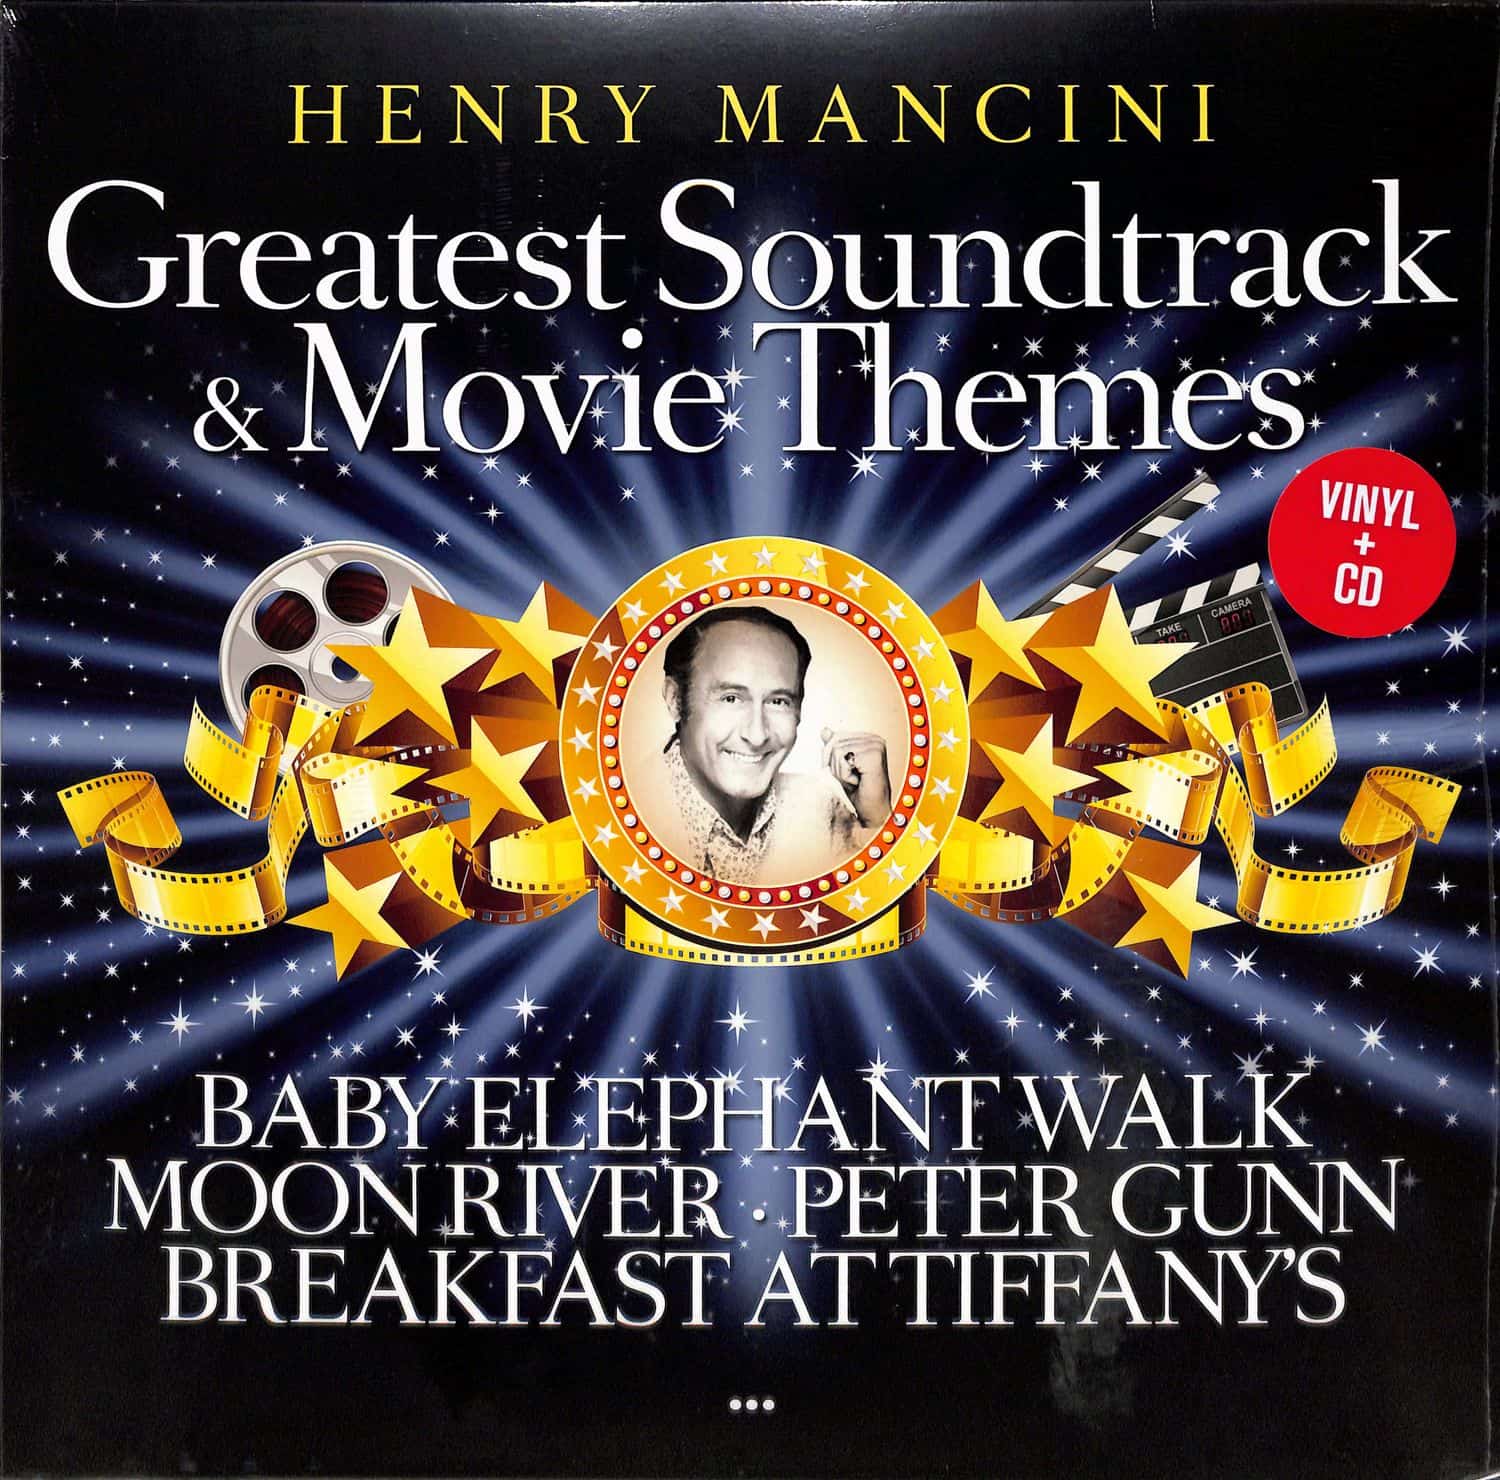 Henry Mancini - GREATEST SOUNDTRACK & MOVIE THEMES 